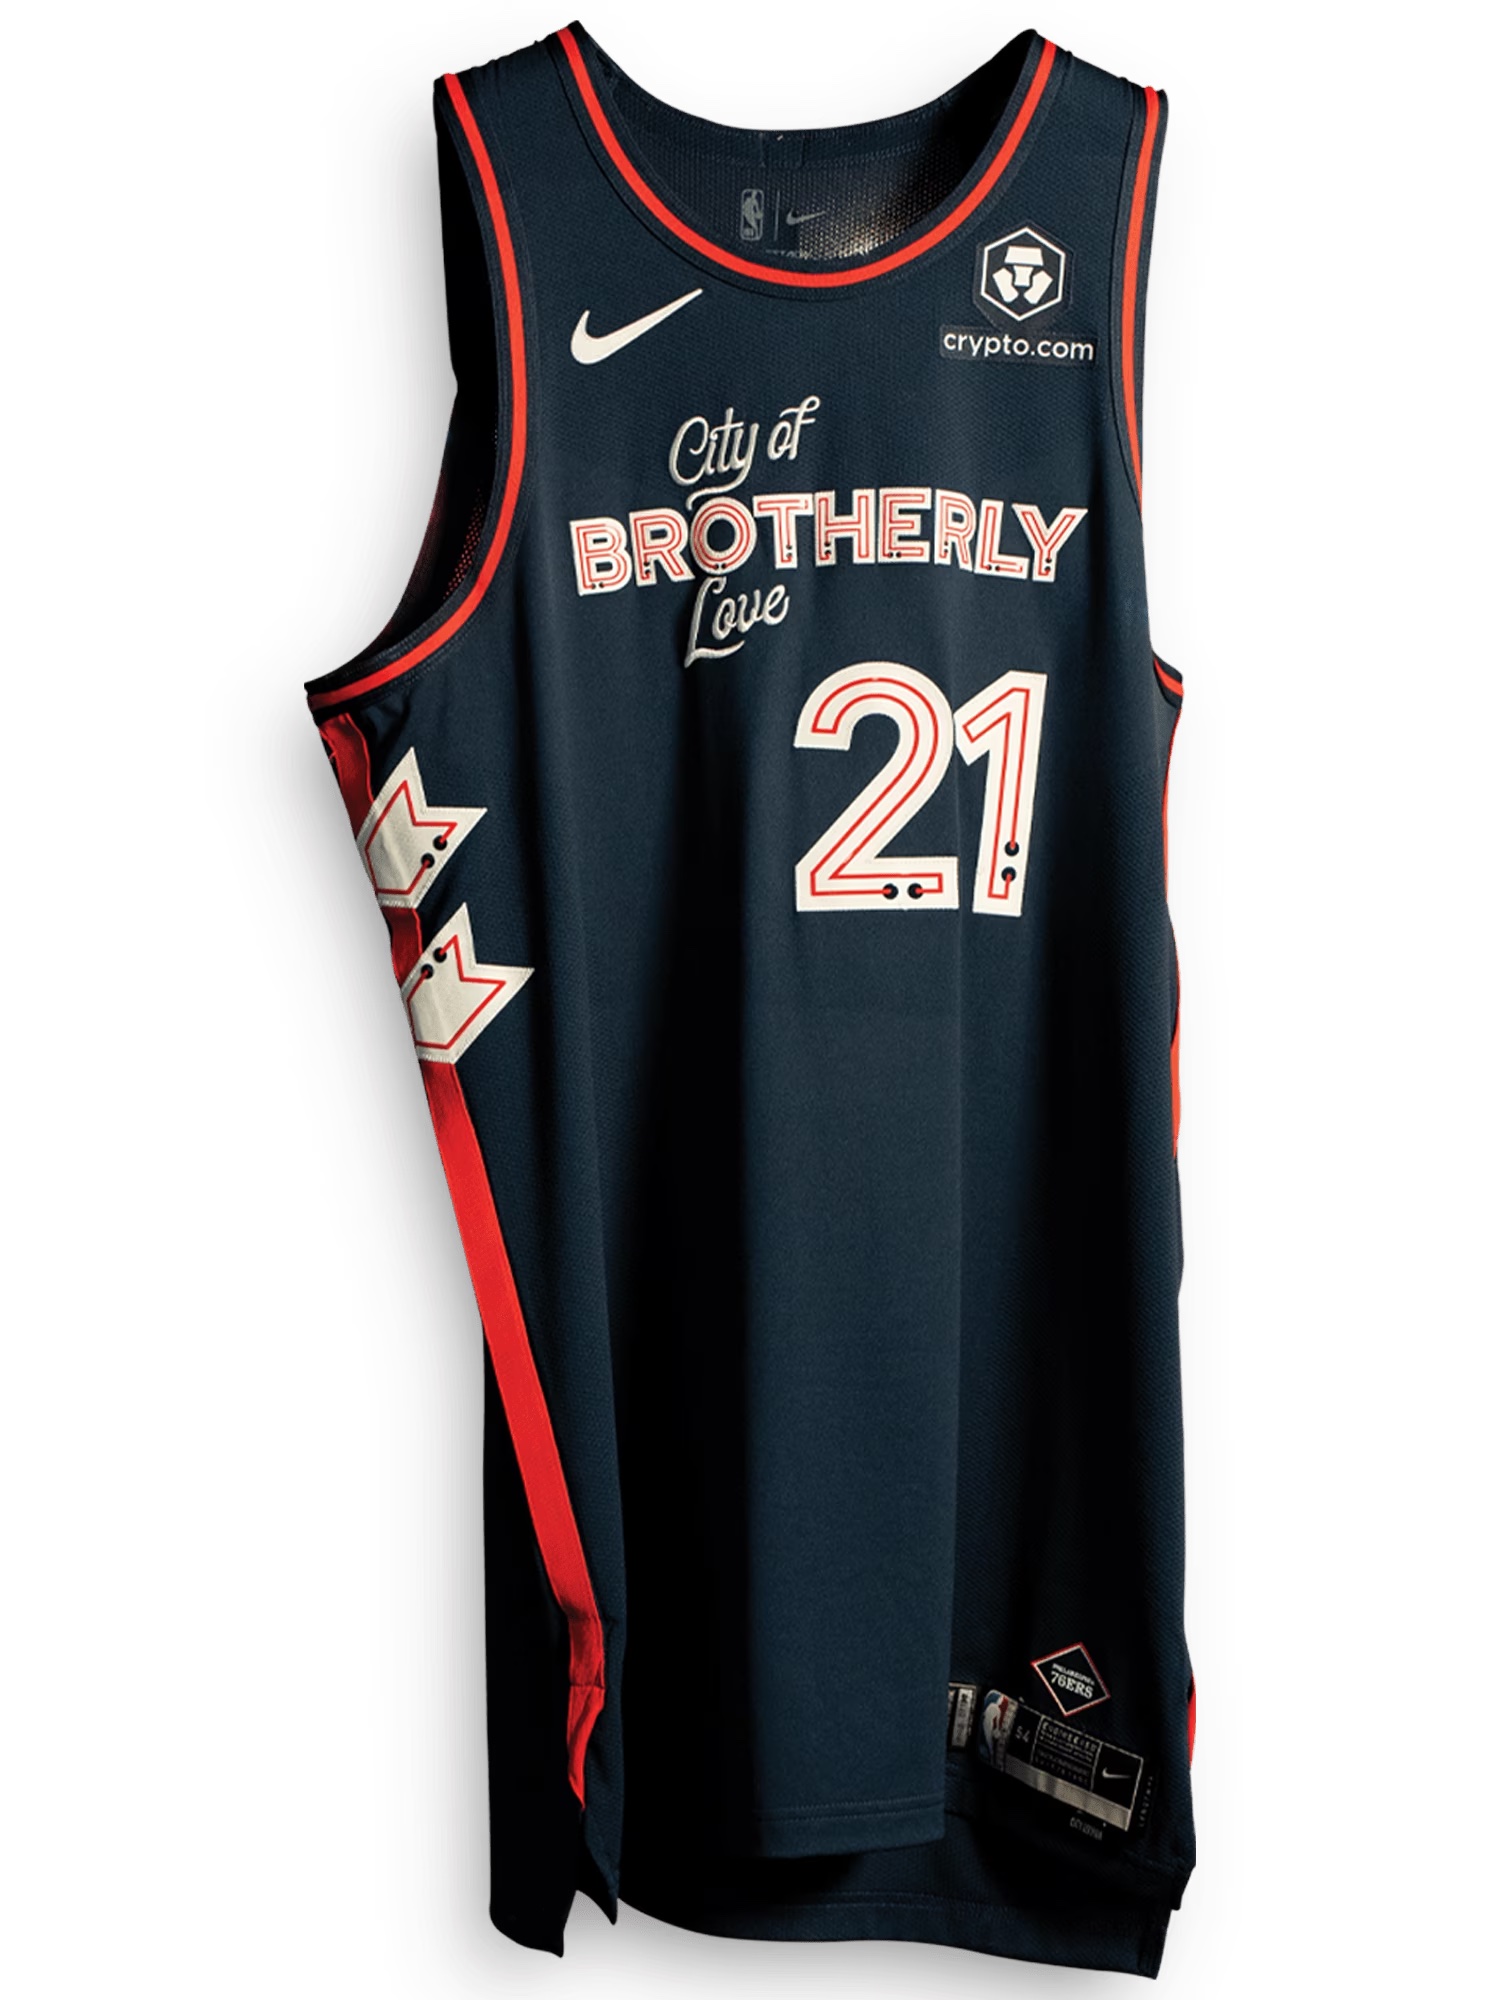 2023-24 Nike NBA City Edition uniforms unveiled